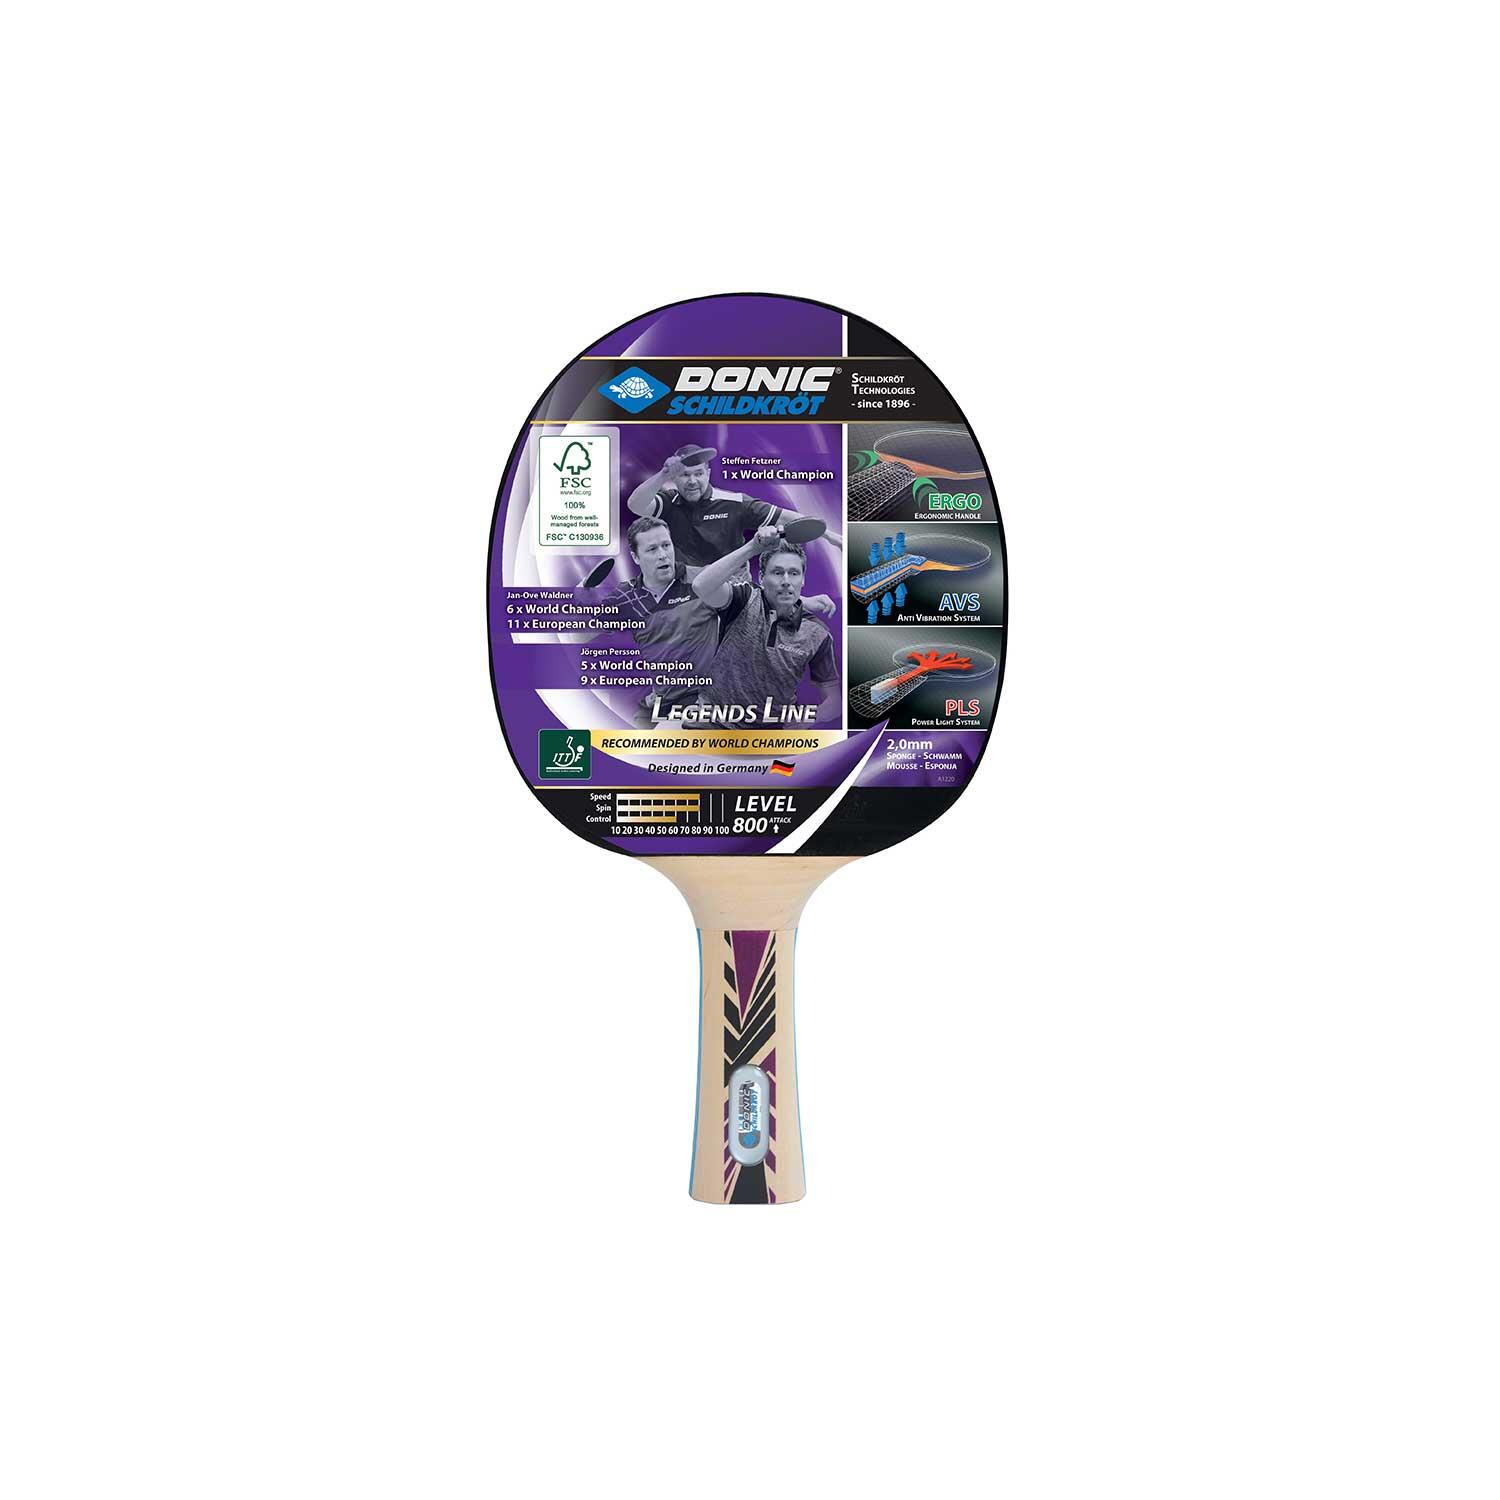 Legends 800 Table Tennis Bat (Black/Beige) 2/3